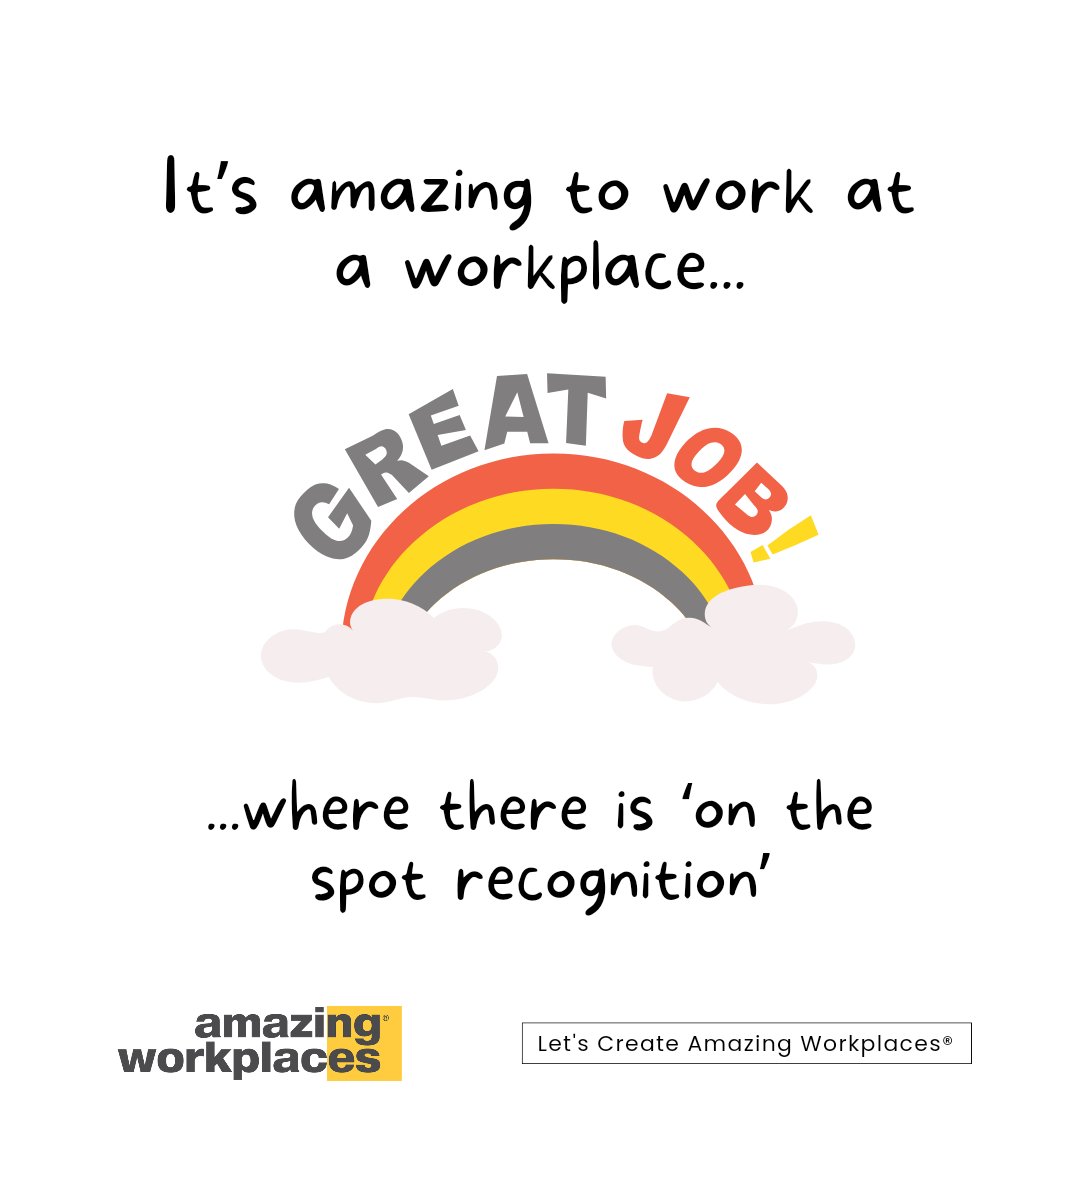 #Employeerecognition #culture #appreciation #employeeappreciation #recognition #rewards #rewardsandrecognition 
#employeeengagement #amazingworkplaces 
#LetsCreateAmazingWorkplaces